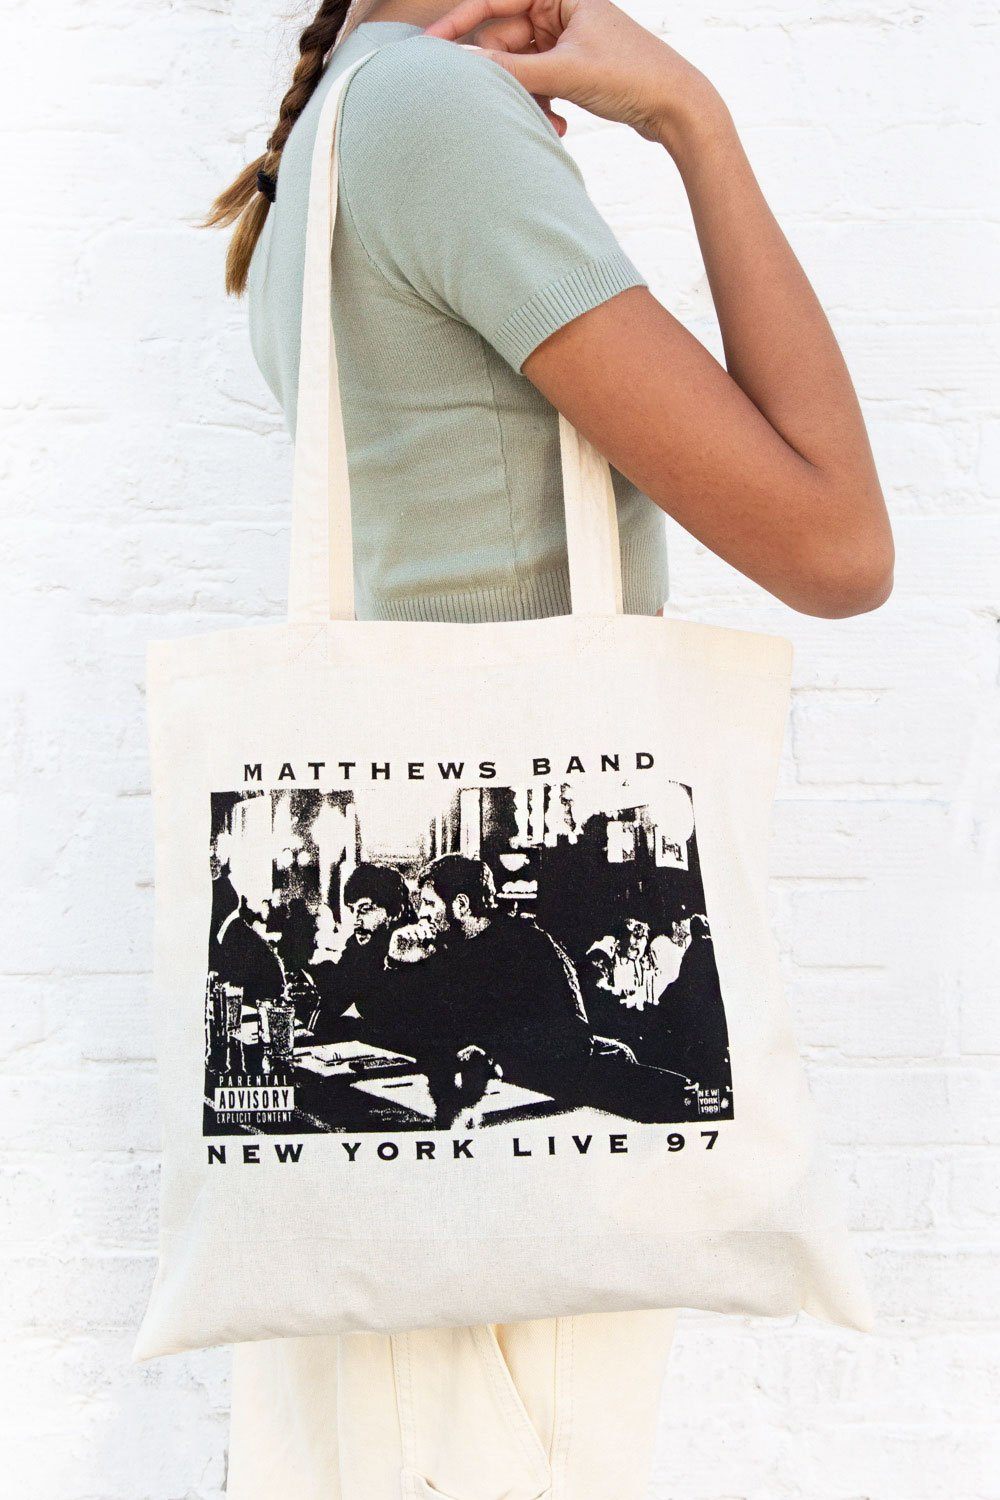 Gypsy Records Natural Tote Bag – Newford Merch